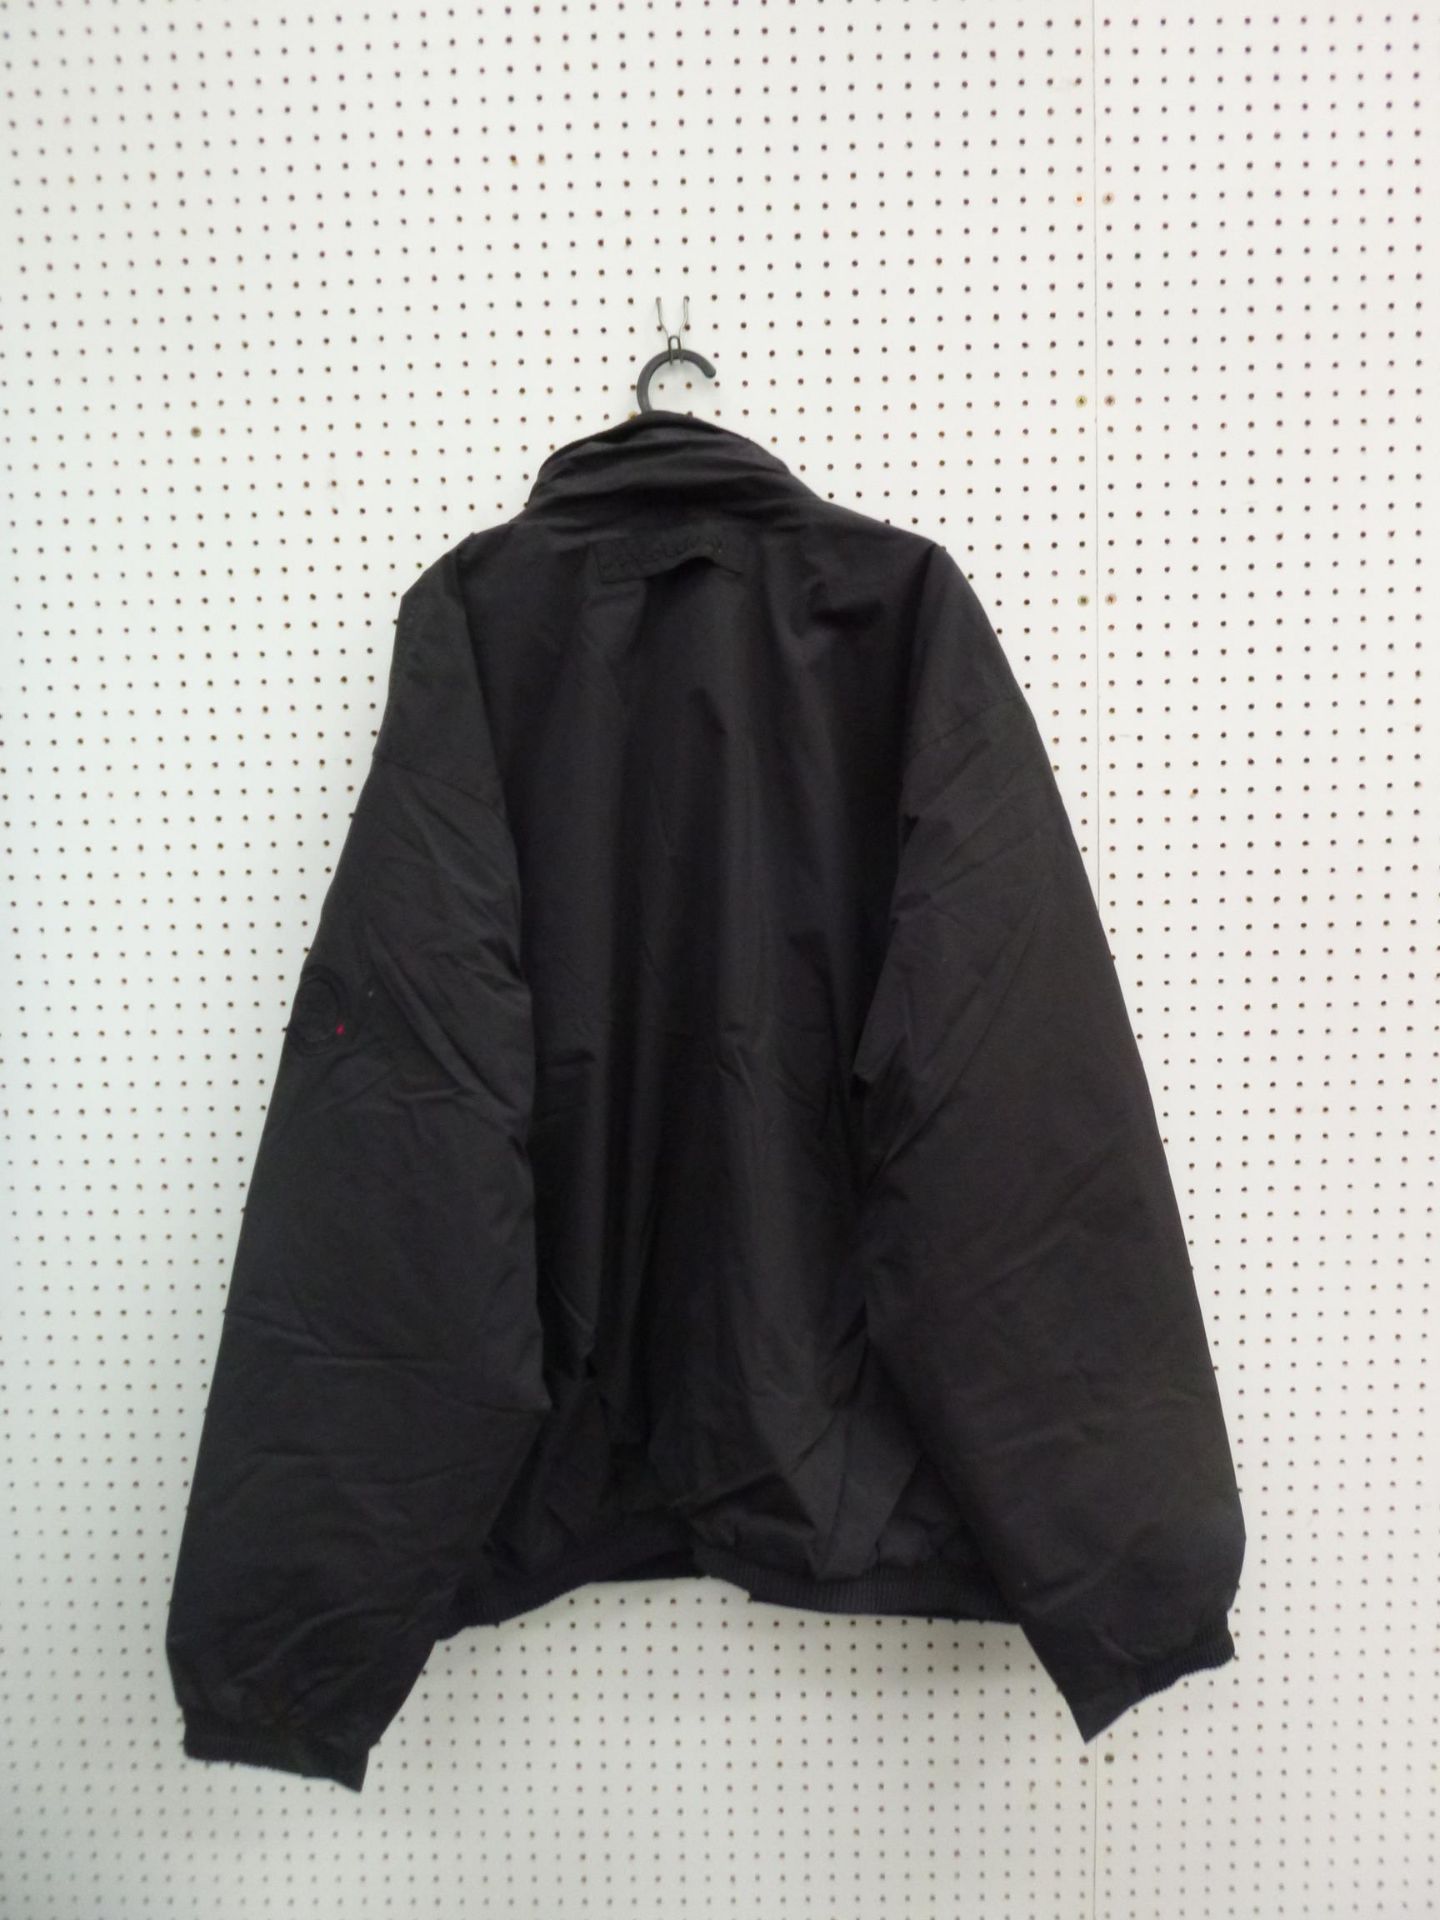 * A New 'Bridleway' Unisex Waterproof Blouson Jacket in Black. Size X Large RRP £51.95 - Image 2 of 2